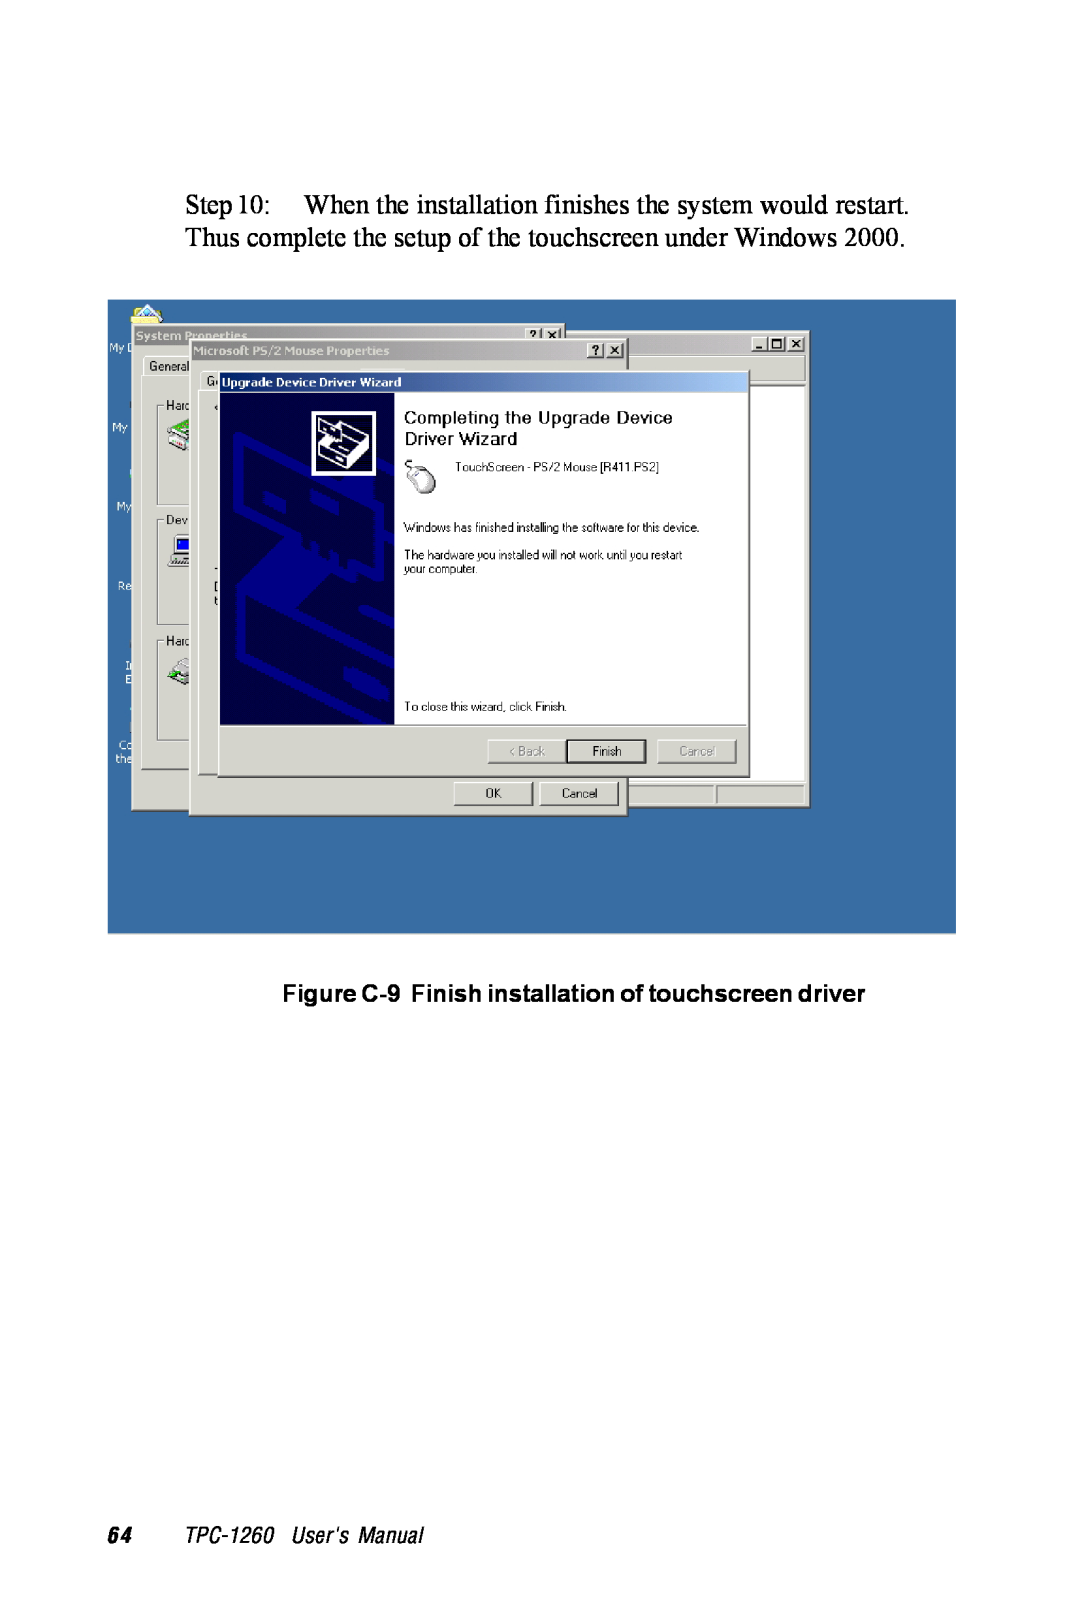 Advantech manual Figure C-9 Finish installation of touchscreen driver, 6 4 TPC-1260 Users Manual 